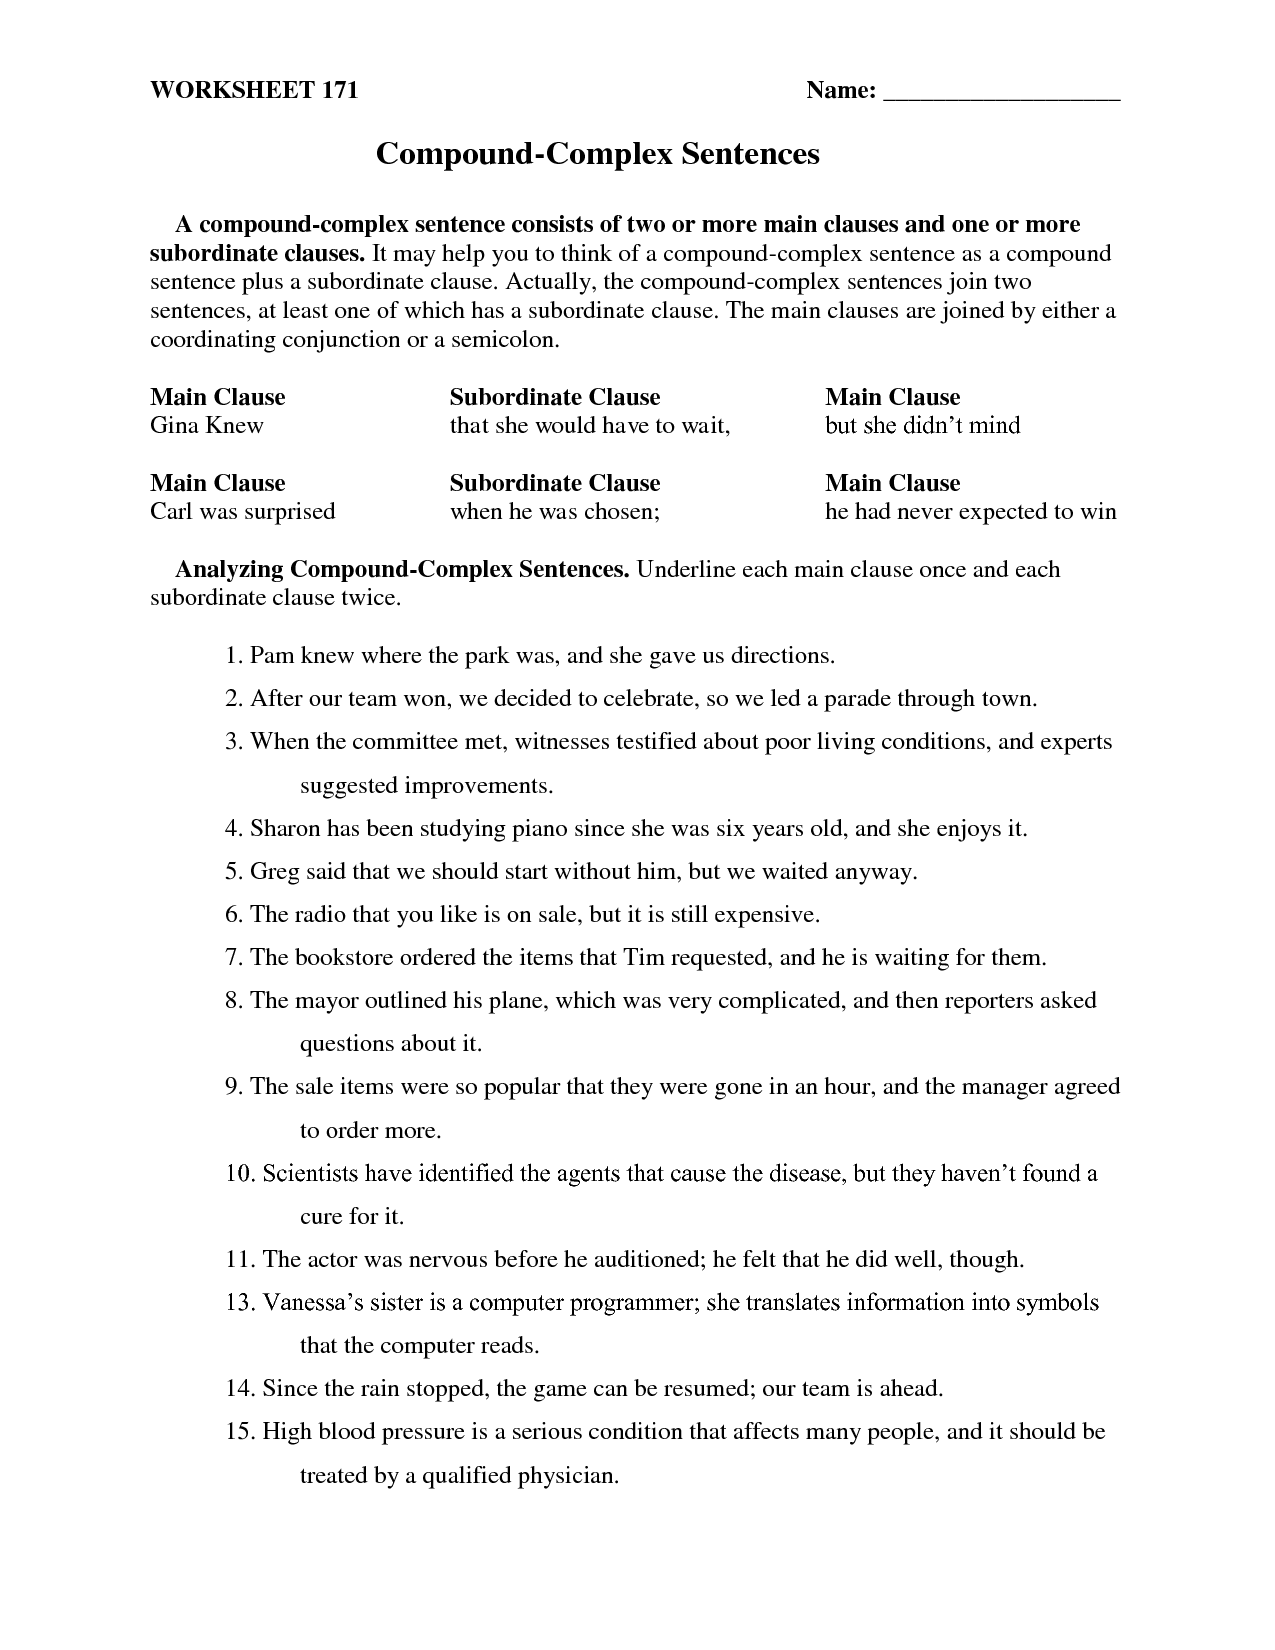 Compound Complex Sentence Worksheets Image